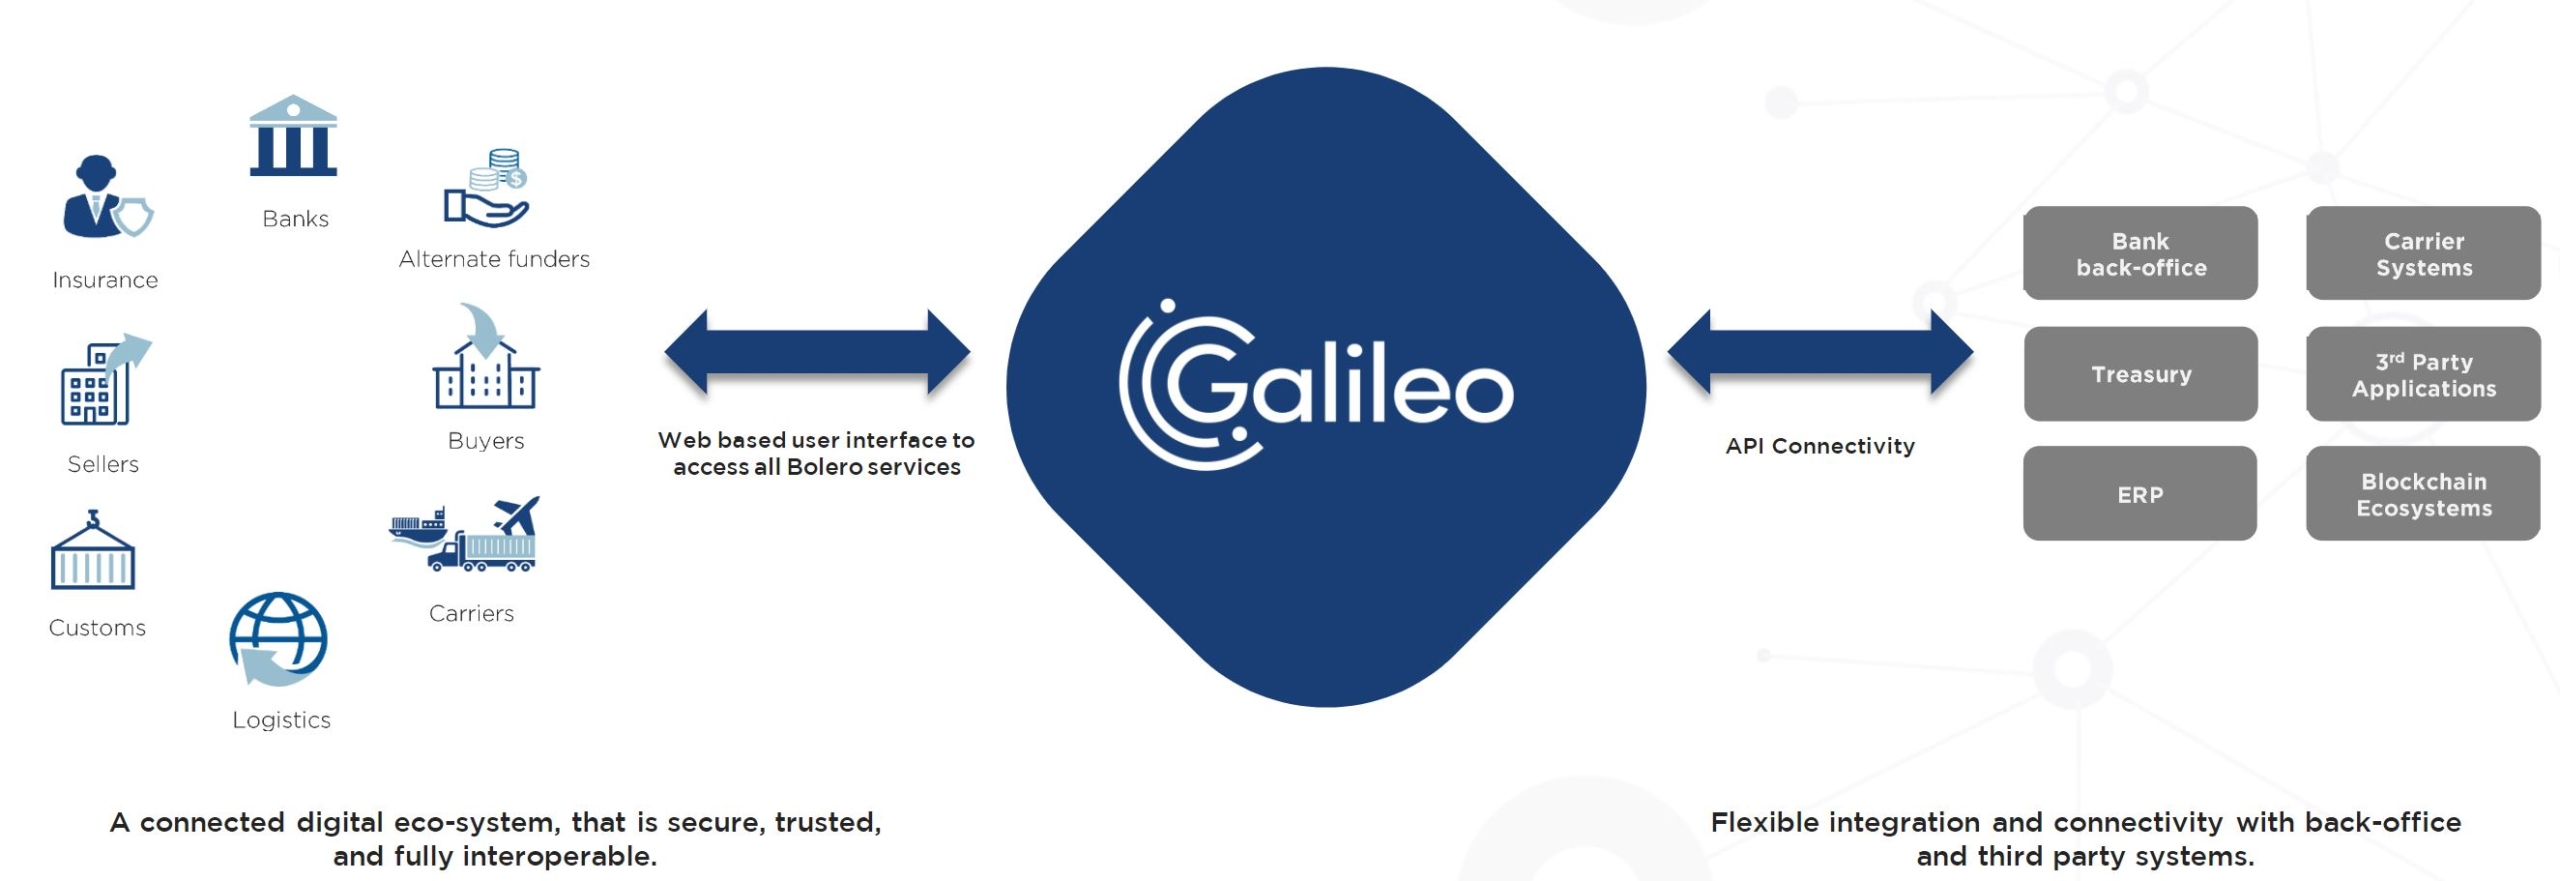 bolero-galileo-connectivity-integration